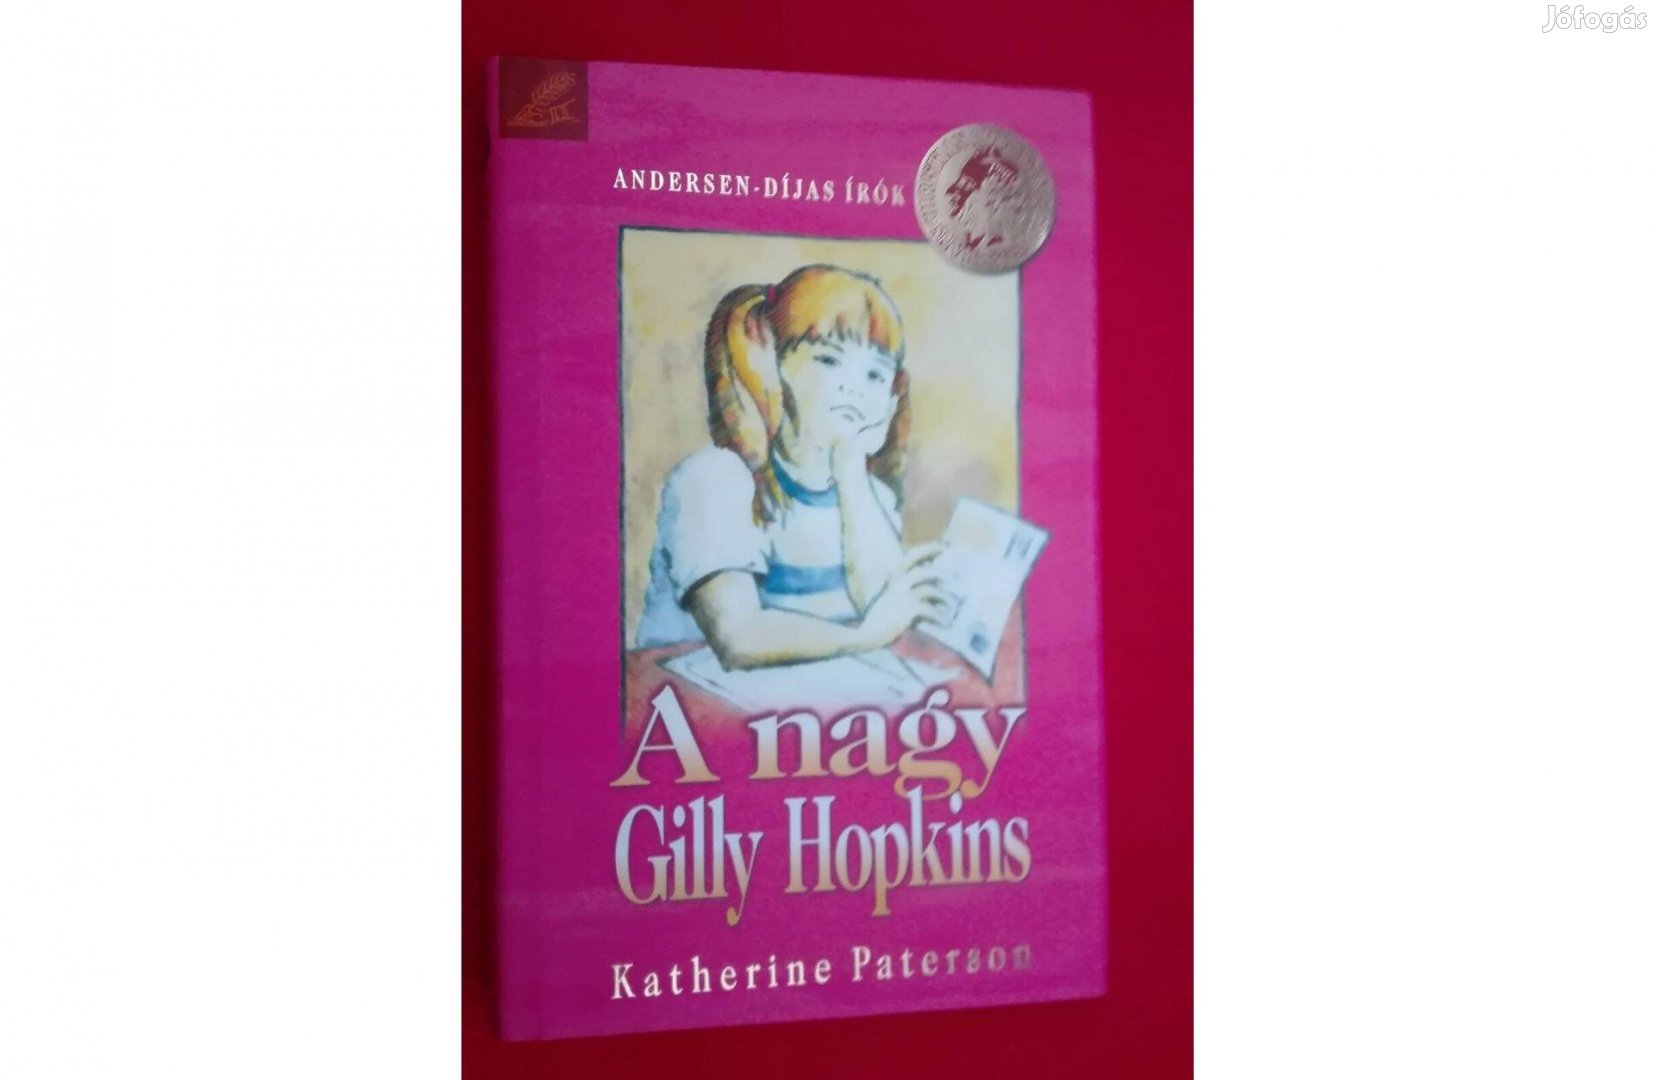 Katherine Paterson: A nagy Gilly Hopkins, Andersen-díjas könyv